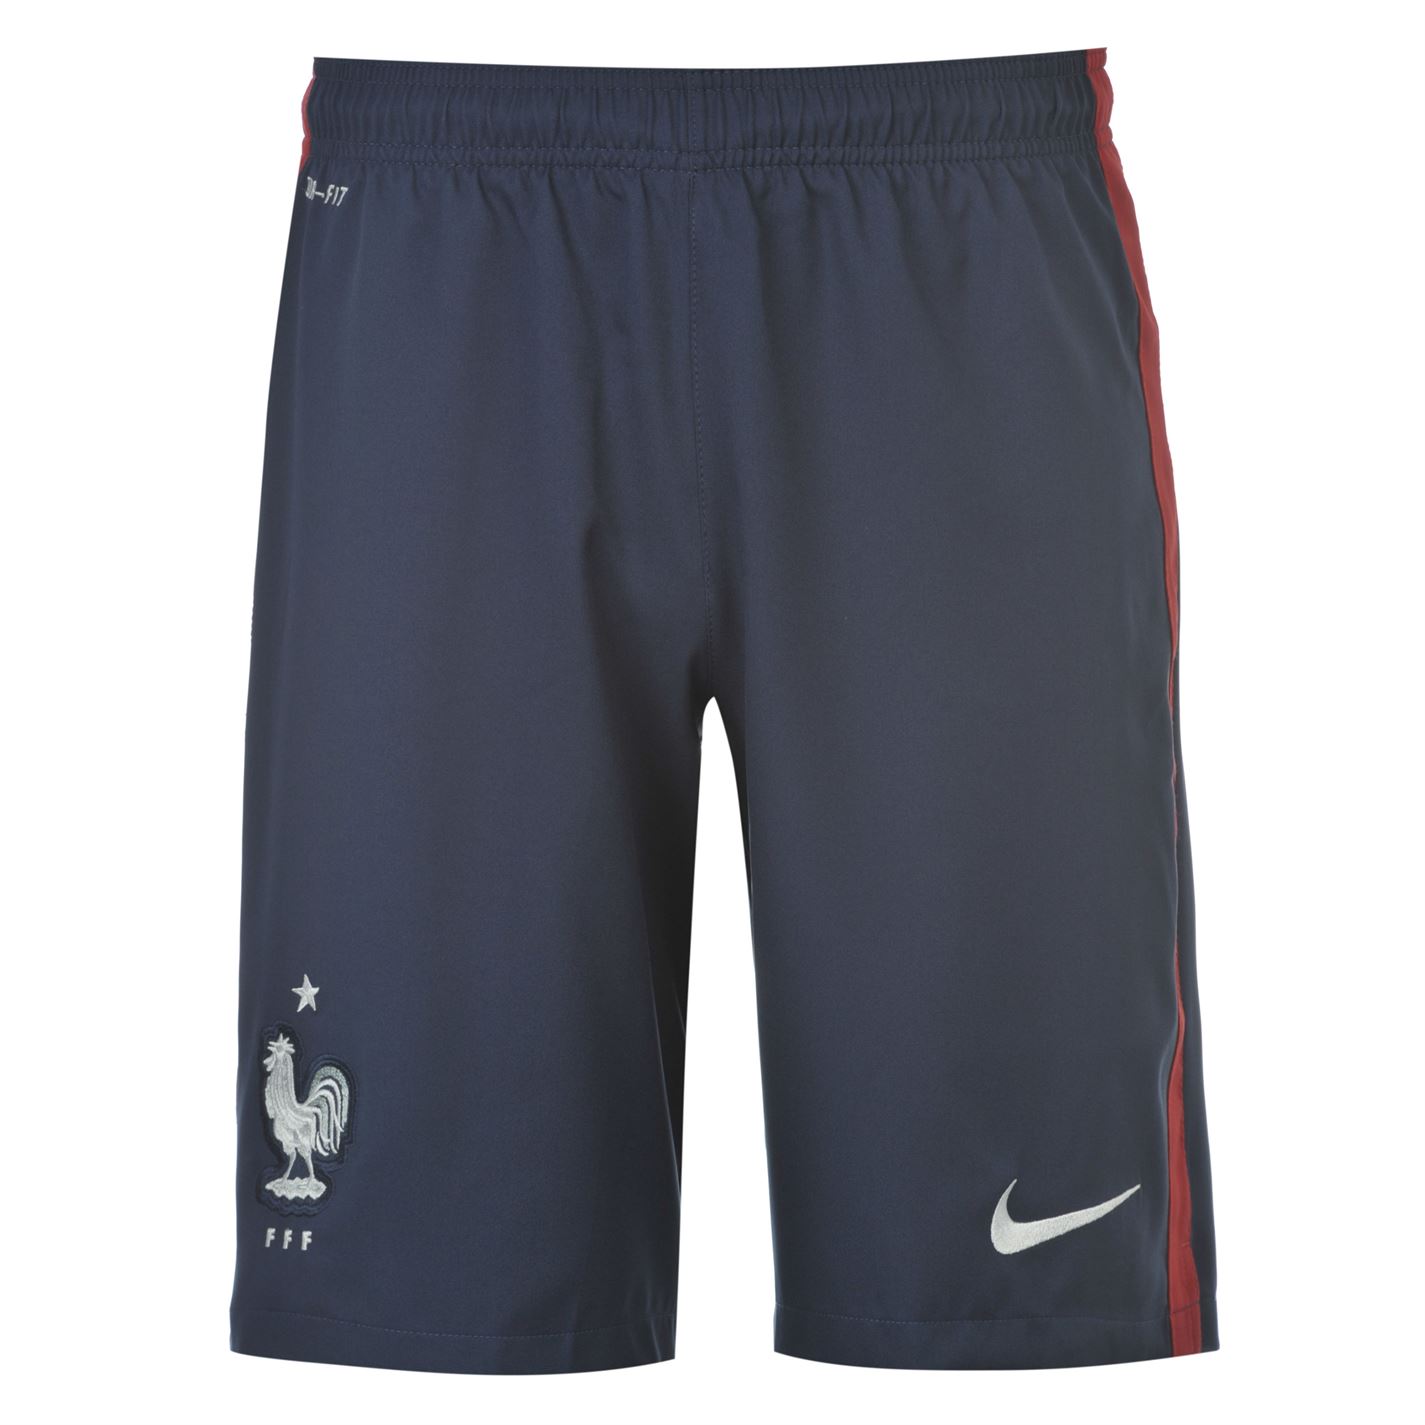 Pantaloni scurti Nike Franta Away 2015 bleumarin rosu